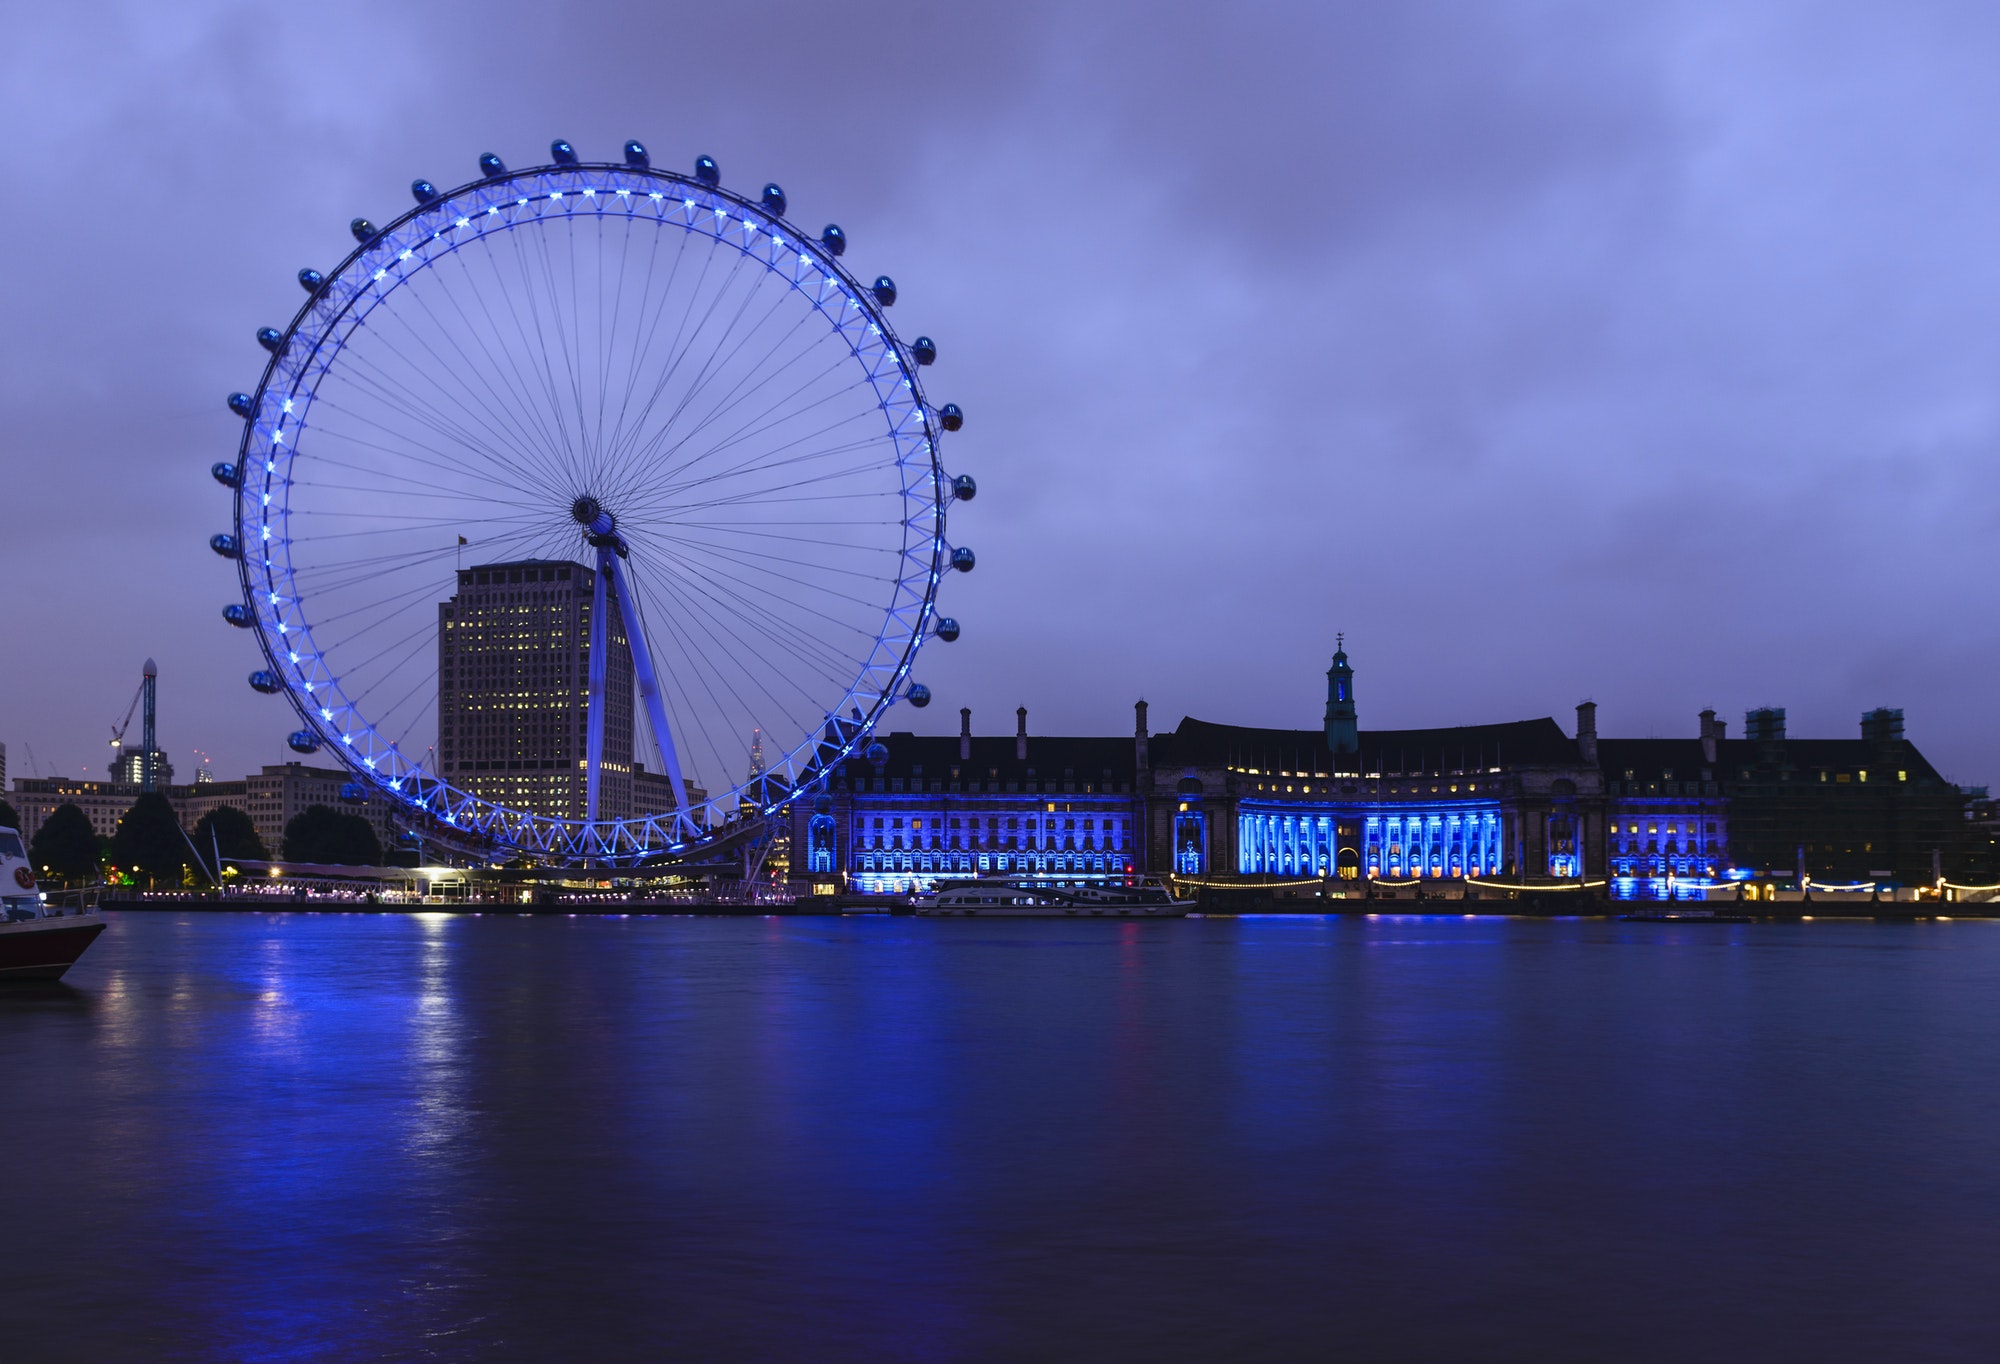 54877,London Eye and waterfront lit up at night, London, United Kingdom